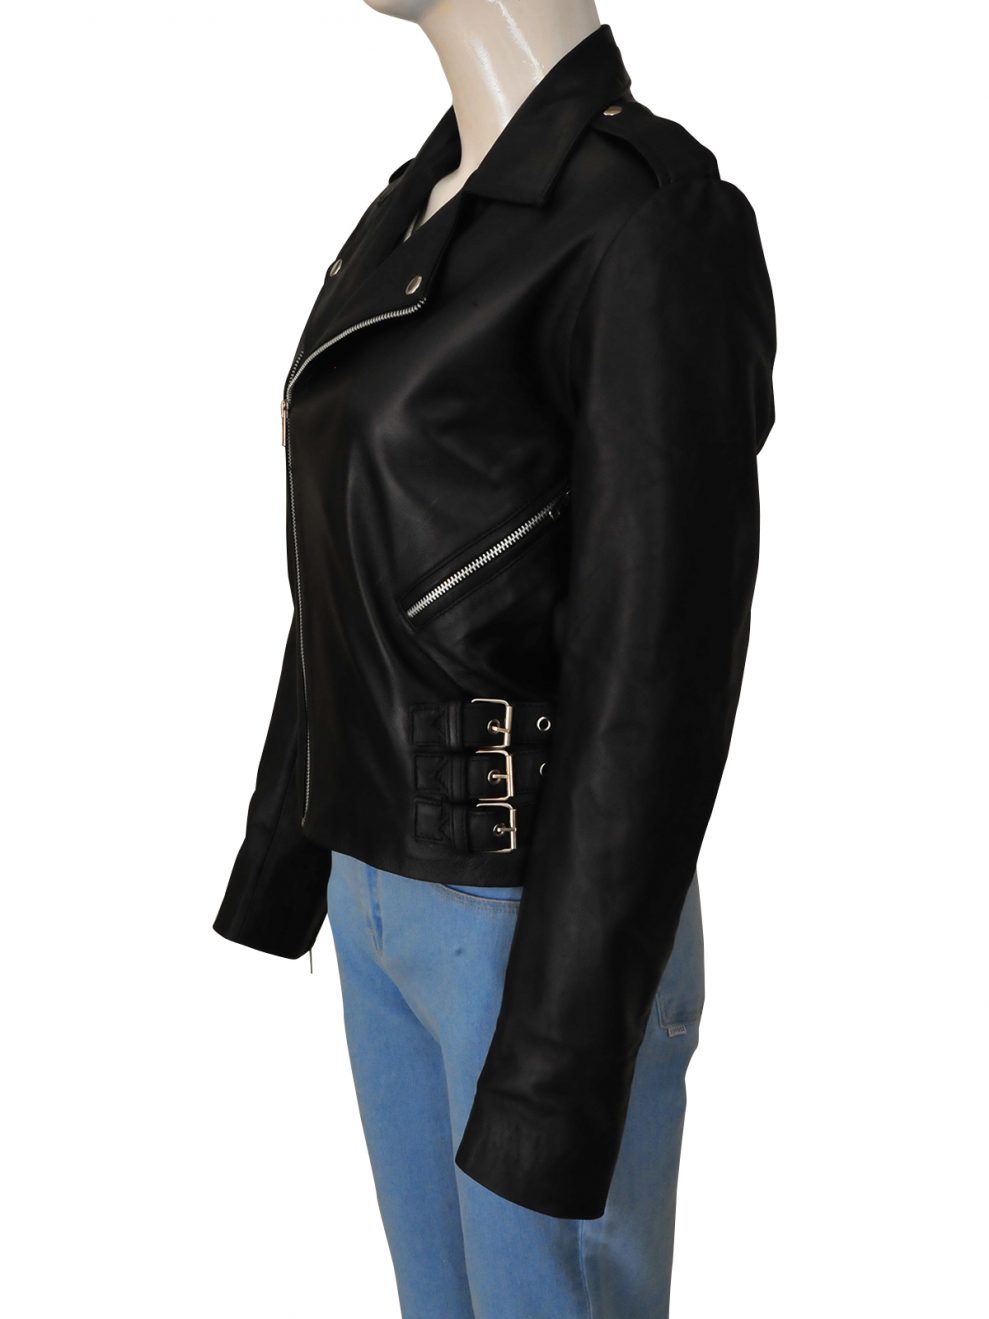 Kim Kardashian Motorcycle Leather Jacket